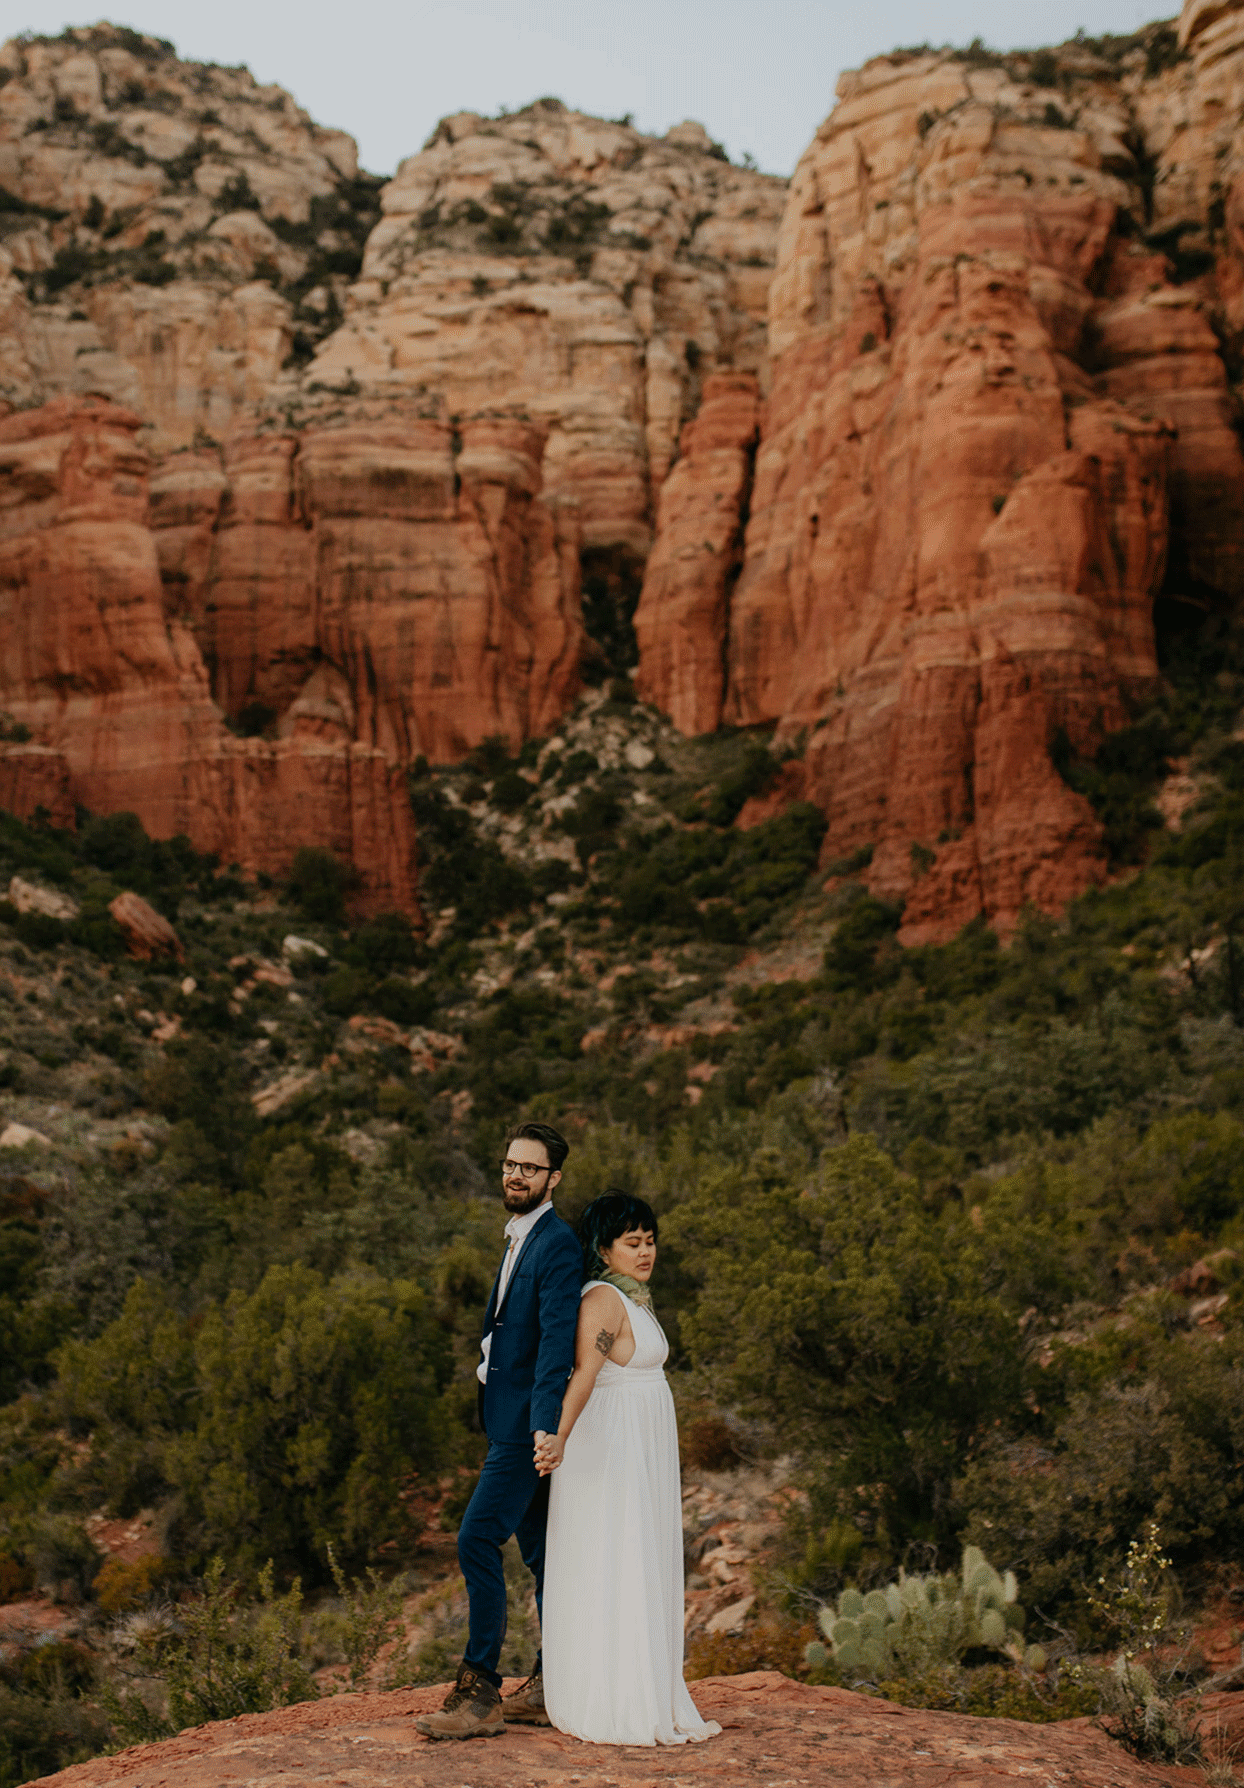 Sunset Sedona Elopement - quiet moments in the red rocks of Arizona